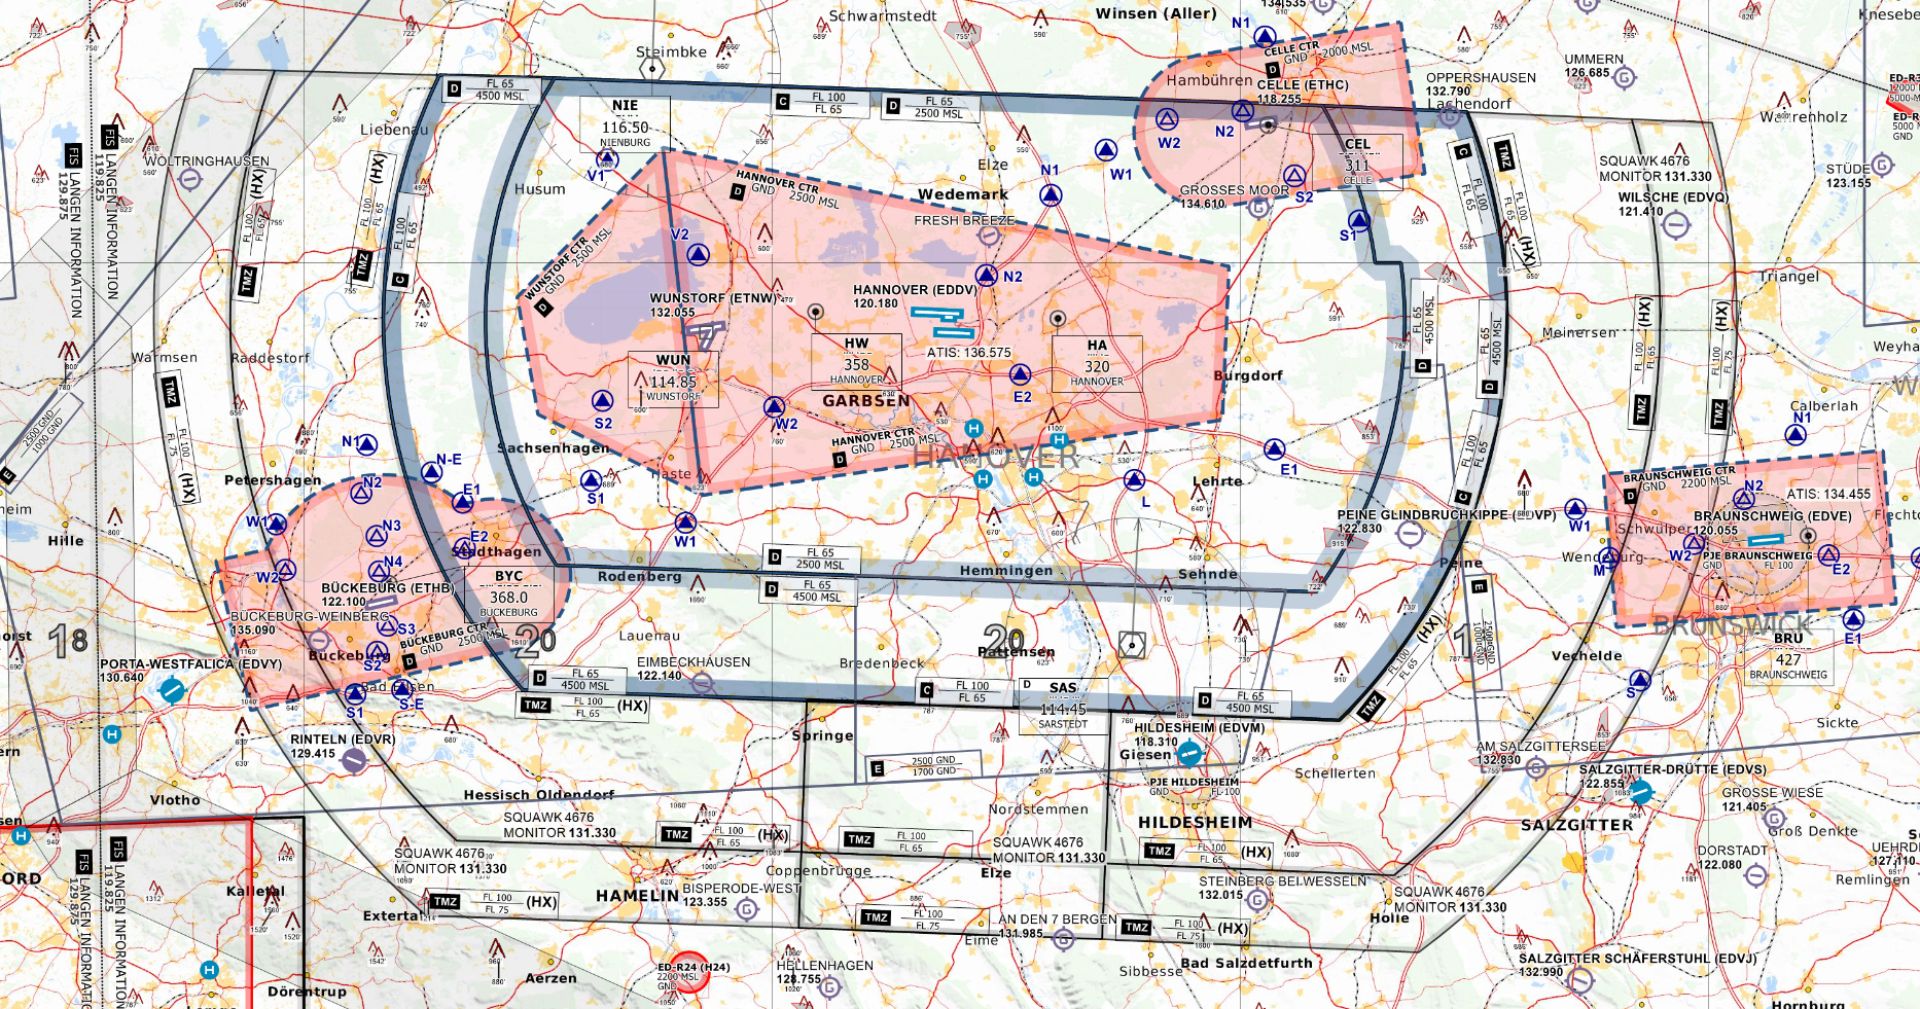 eddv-delta-charlie-airspace.jpg